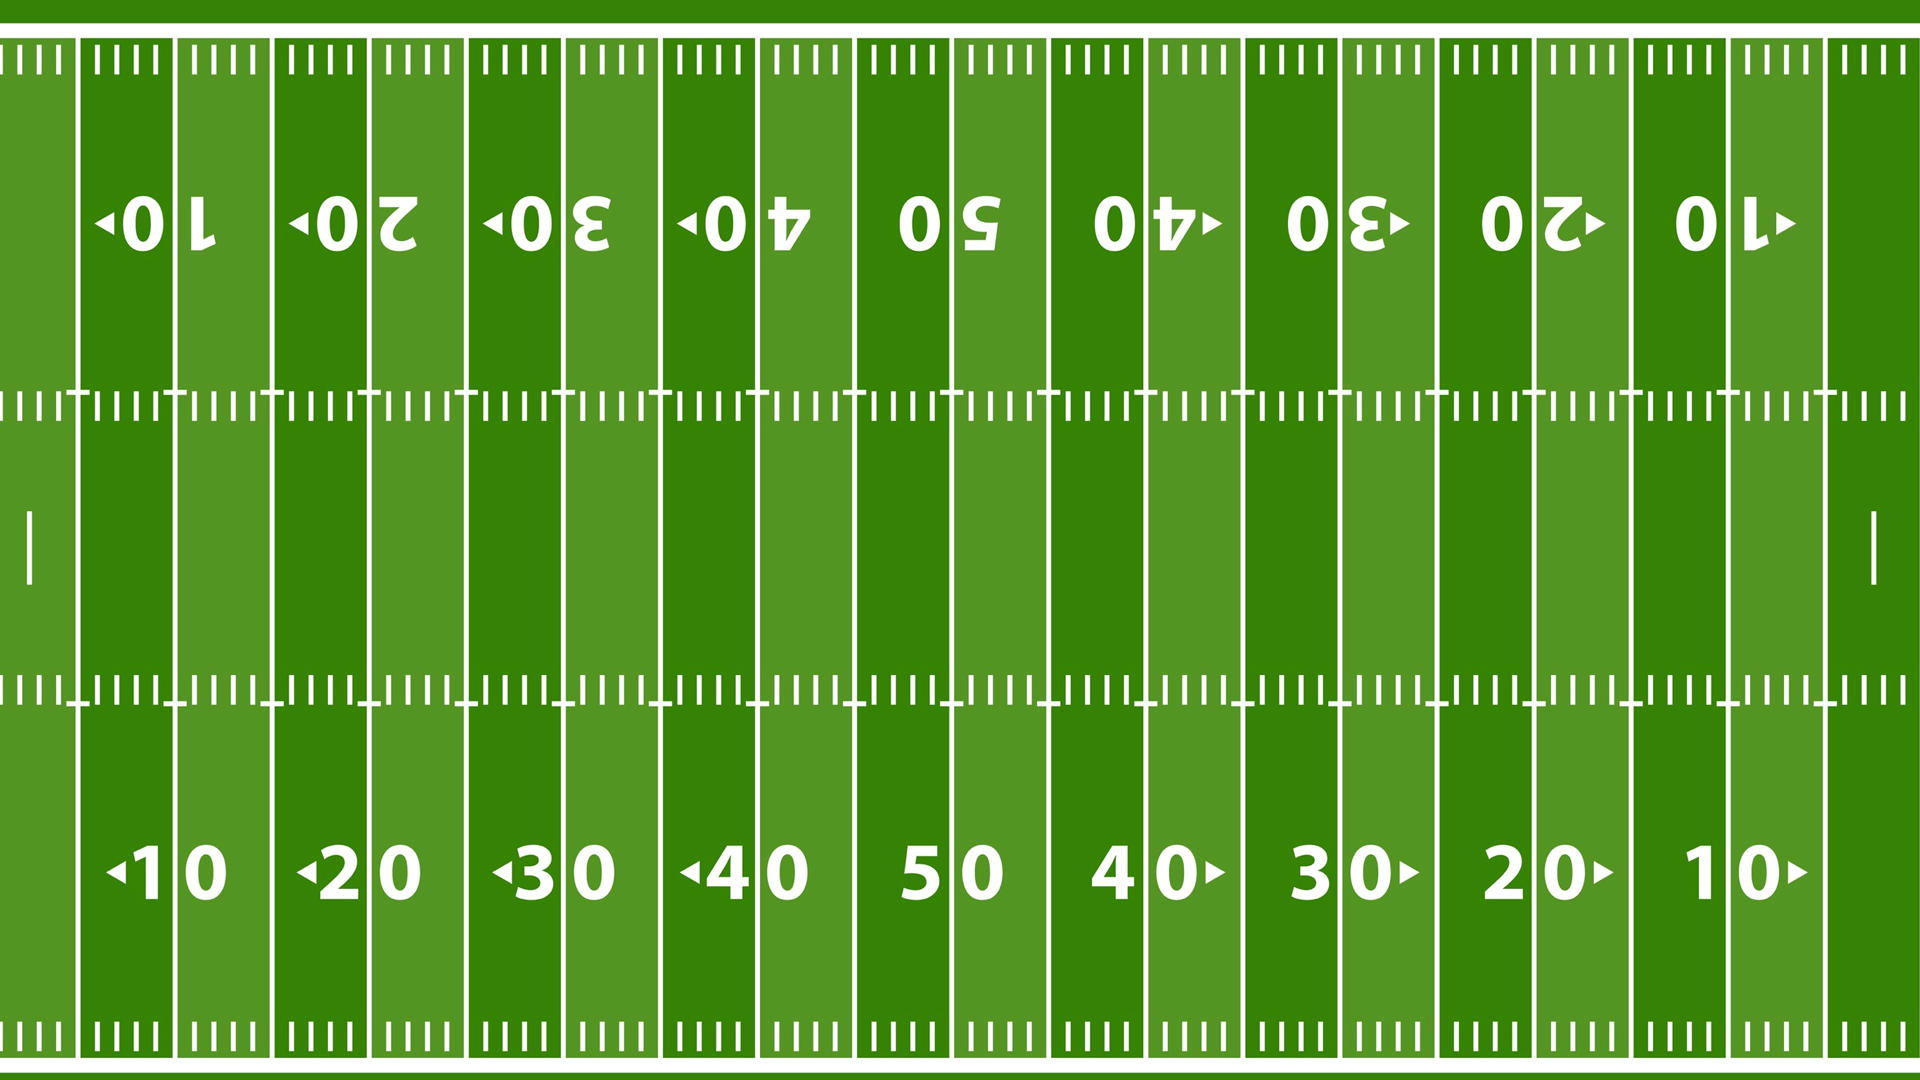 CONDENSED-timemap-football-field